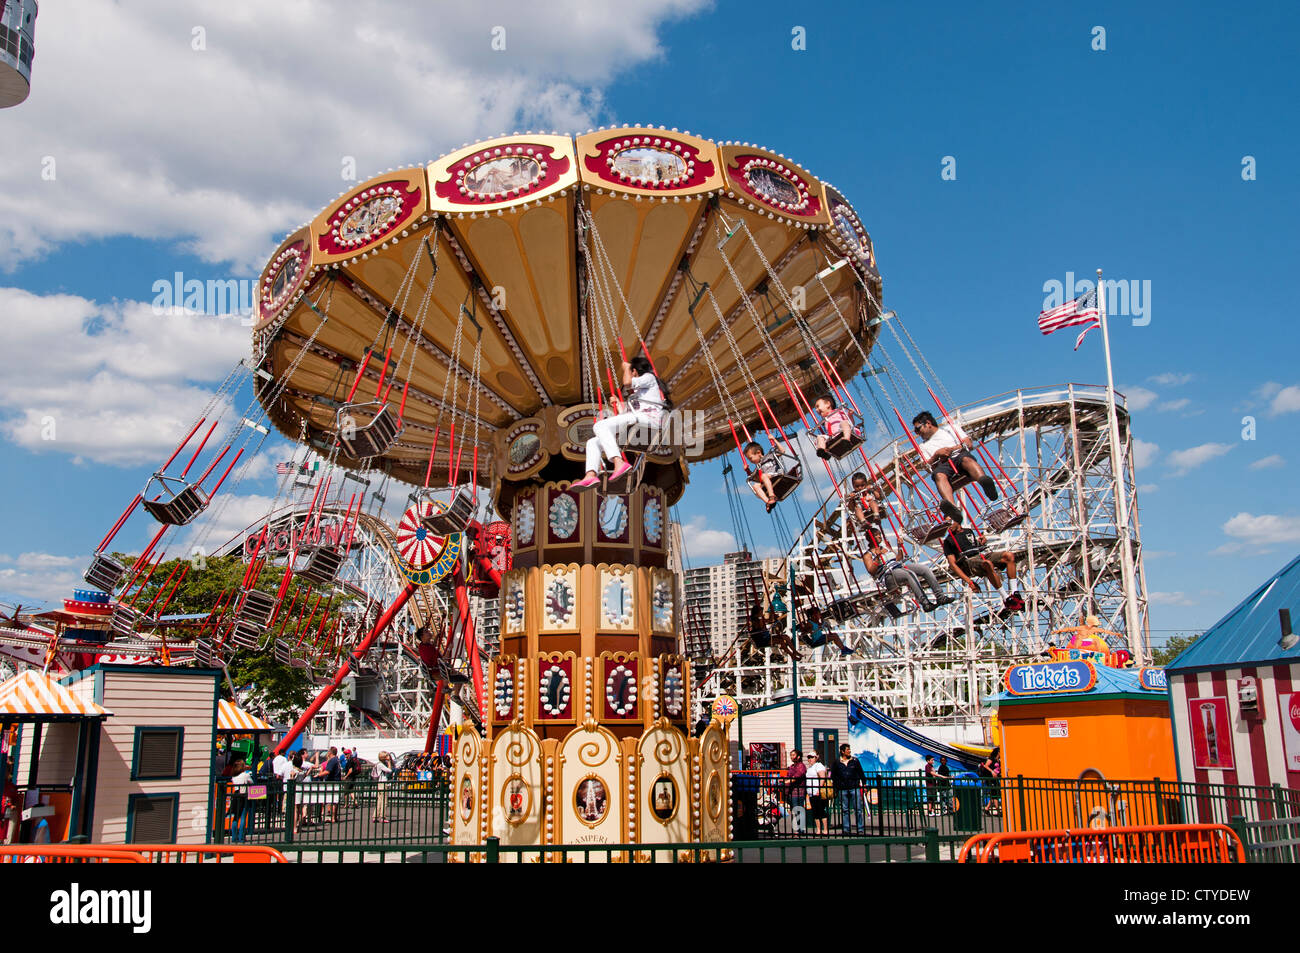 Deno's Wonder Wheel Amusement park Coney Island Luna Beach Boardwalk Brooklyn New York Stock Photo